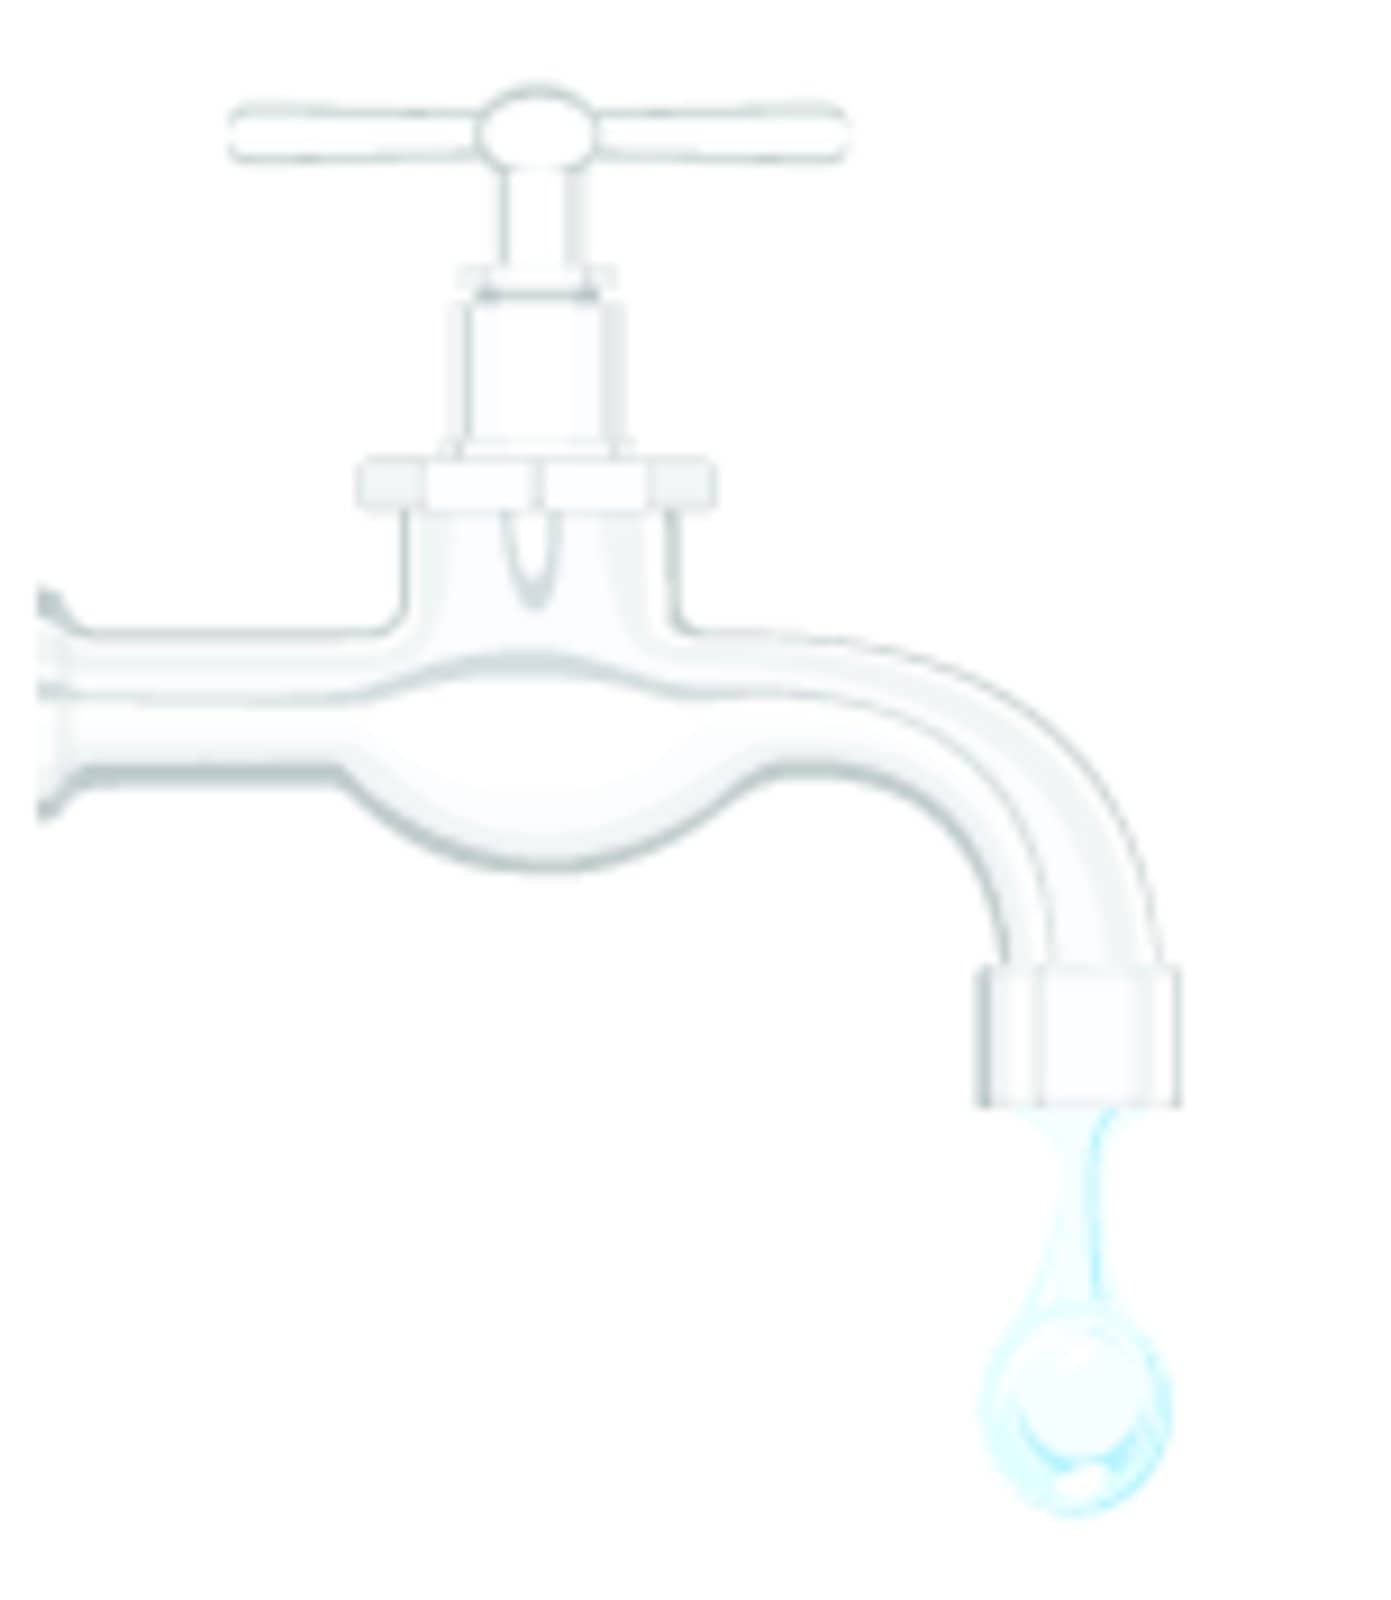 water tap by mtkang